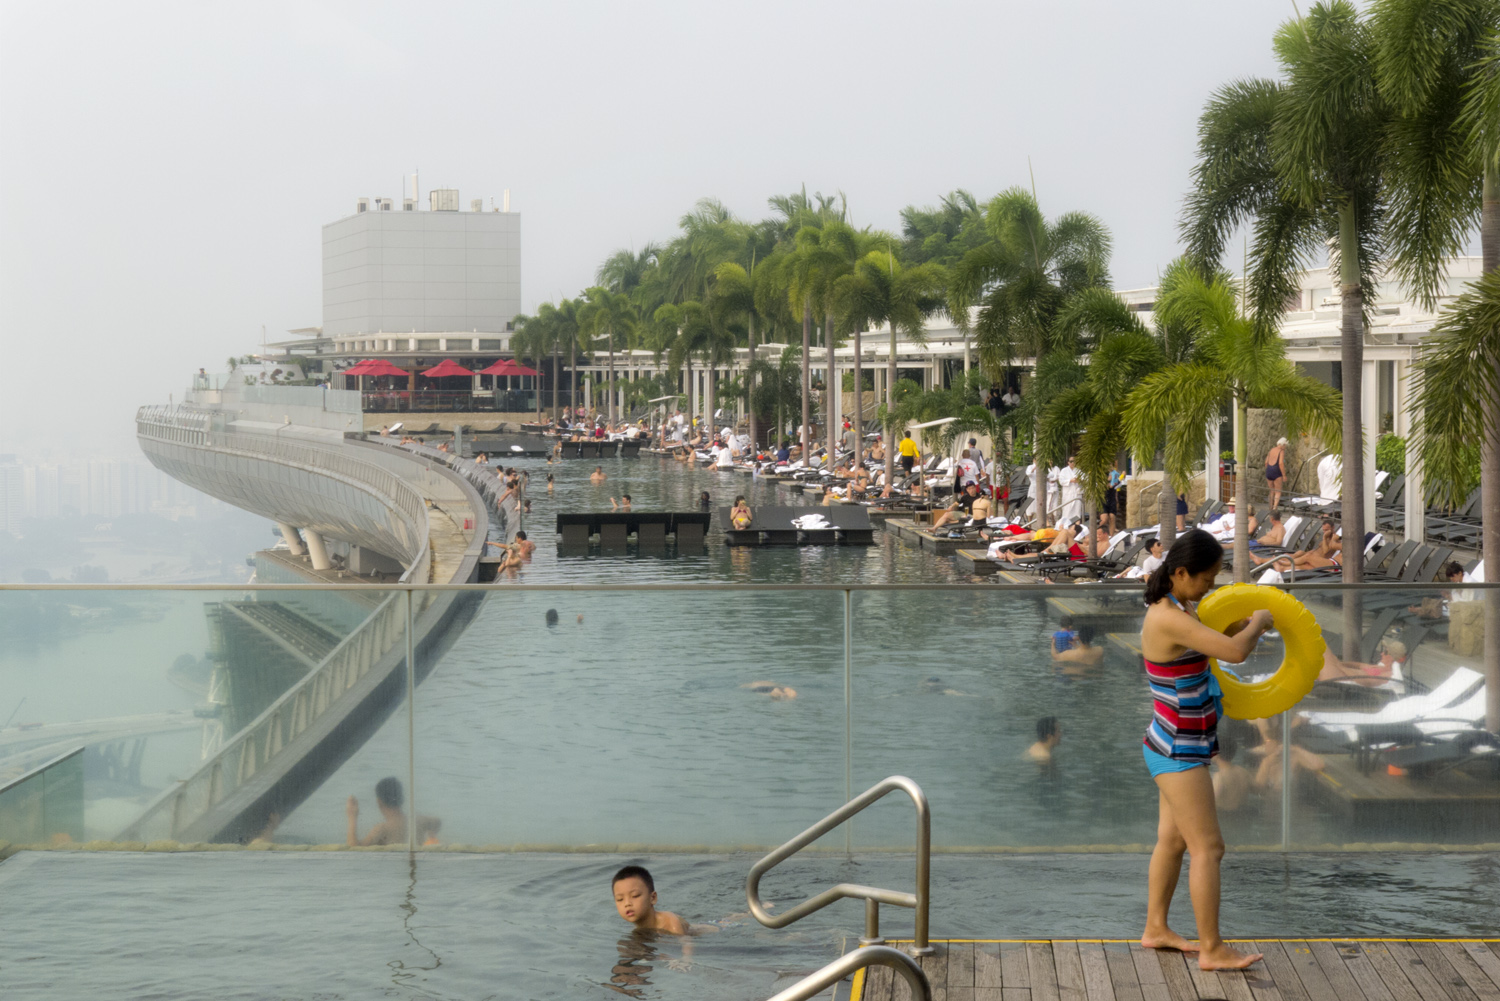 Infinity pool at the Marina Bay Sands Hotel